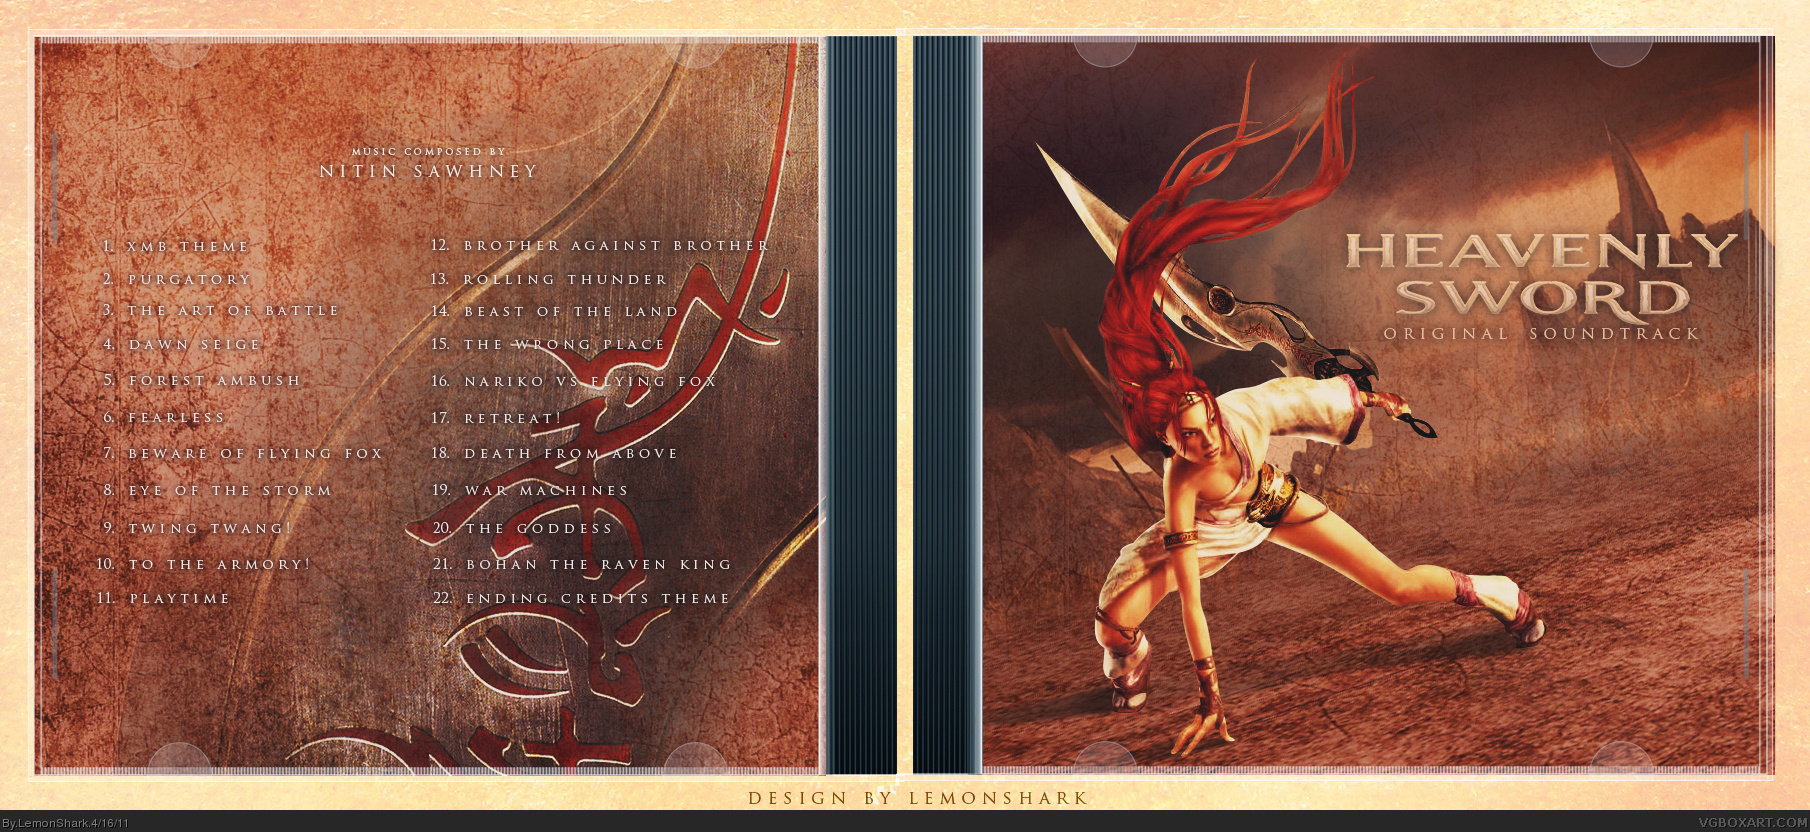 Heavenly Sword Original Soundtrack box cover